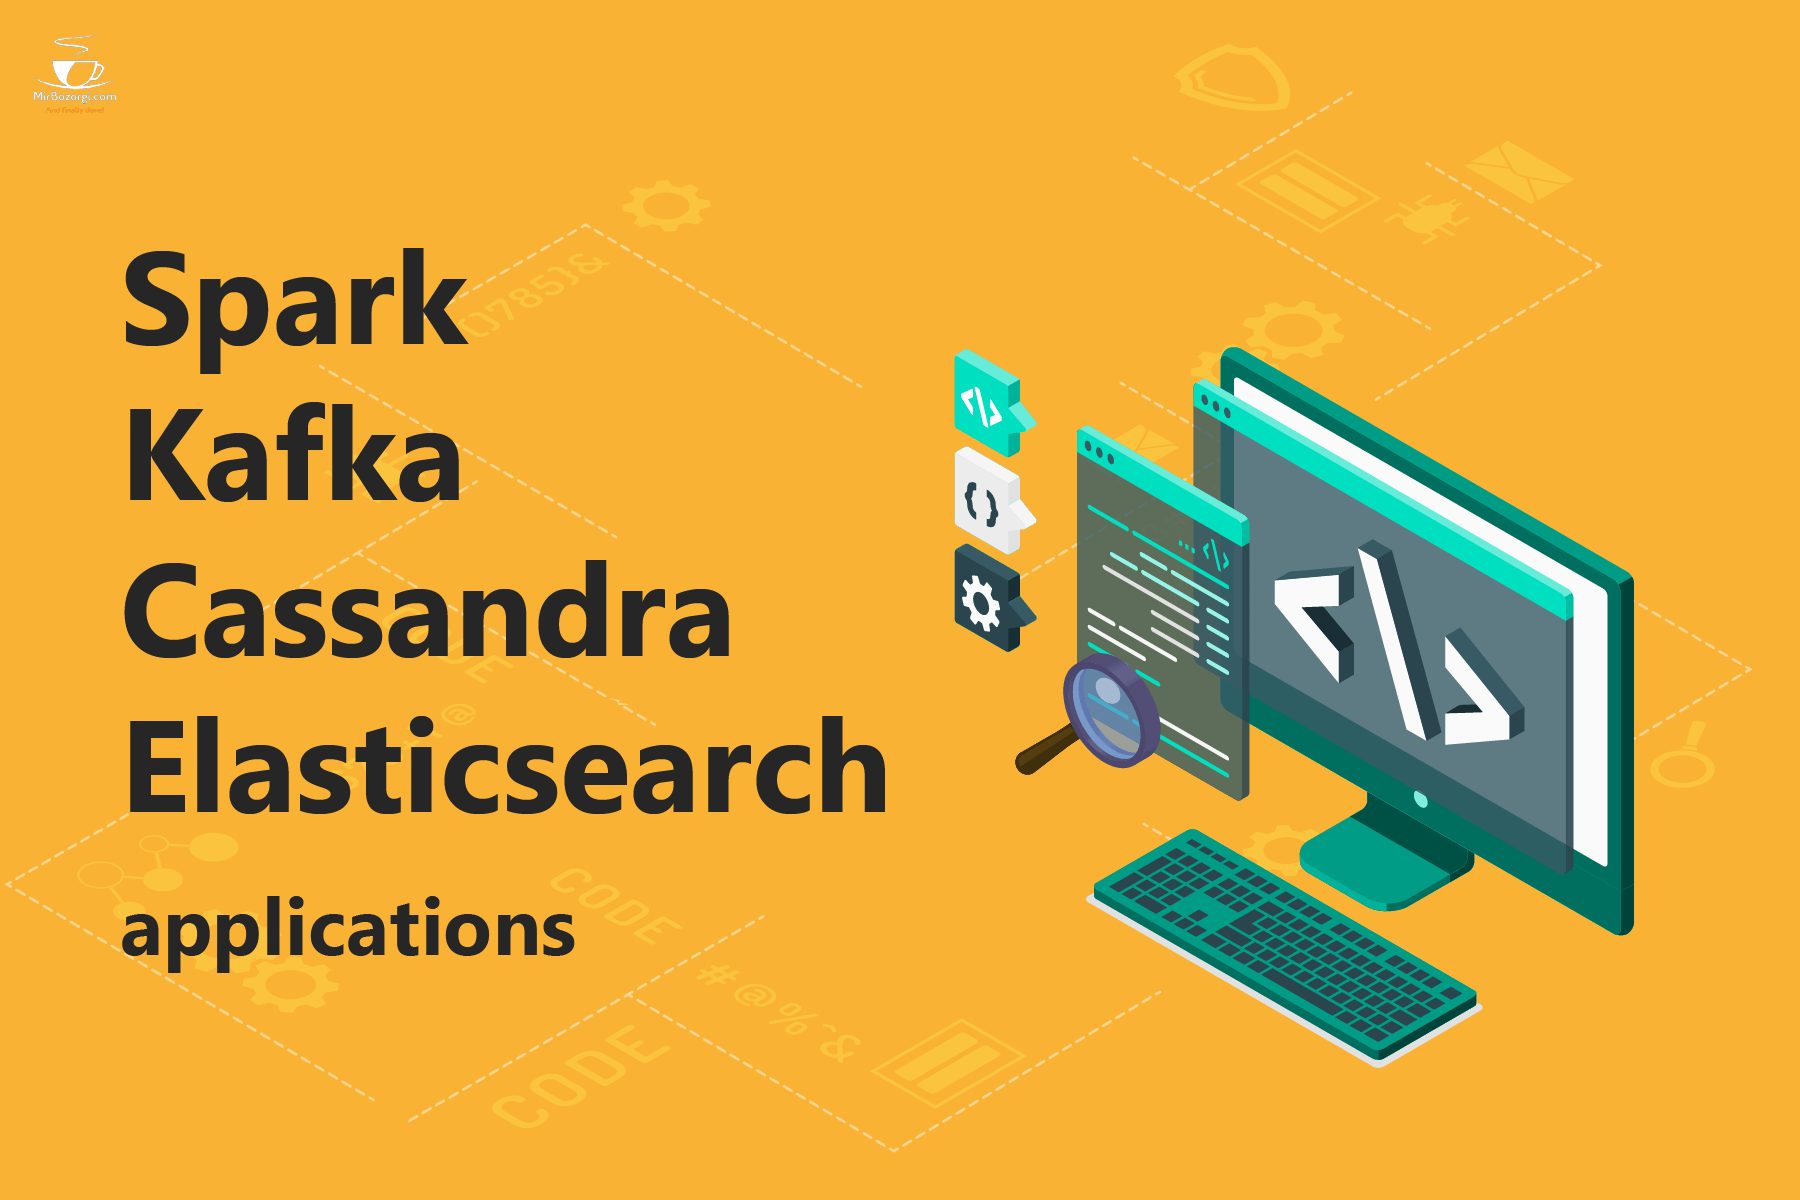 Spark, Kafka, Cassandra and Elasticsearch applications